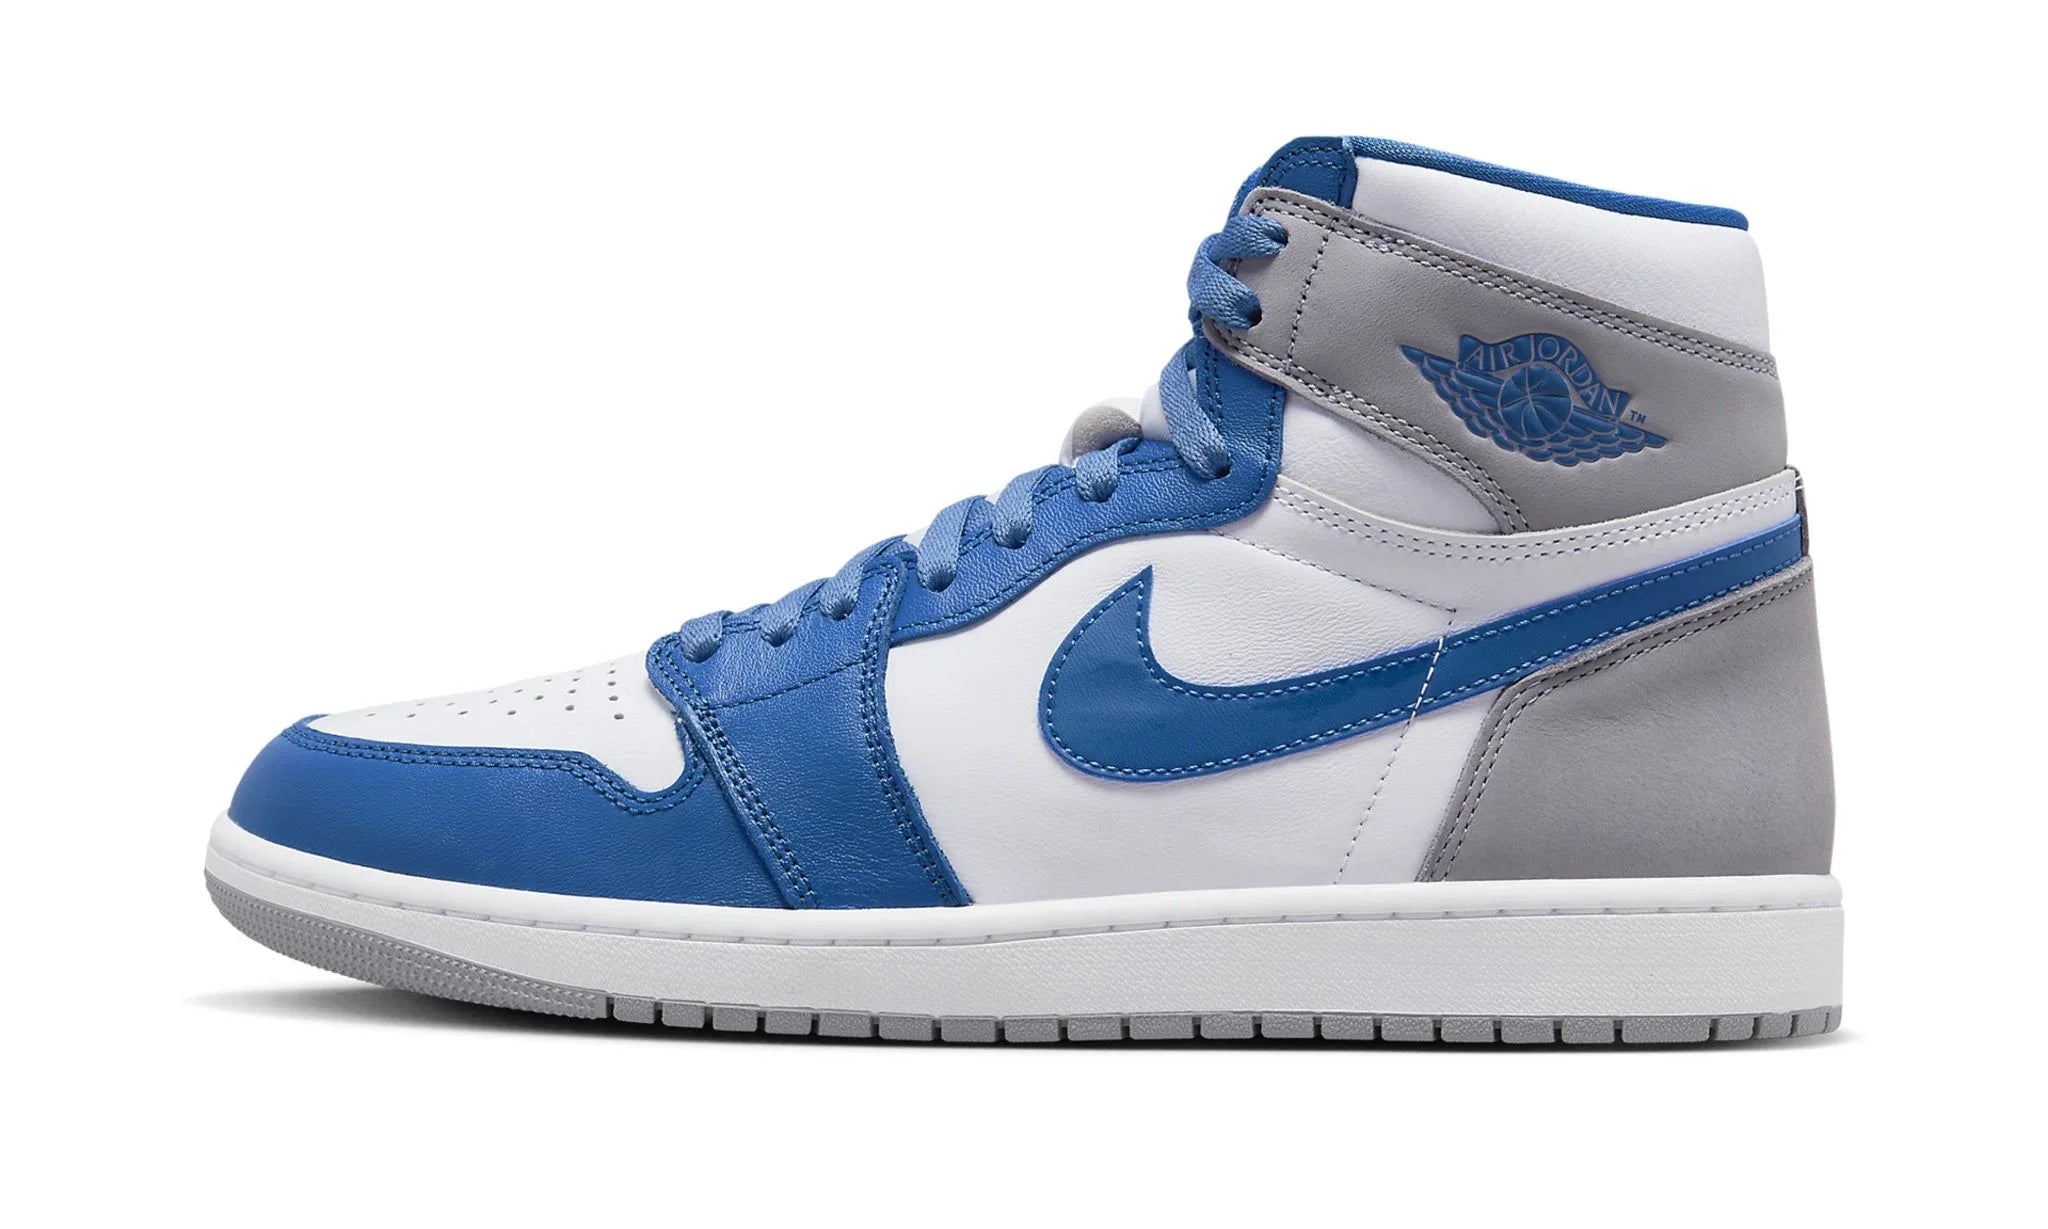 Jordan 1 High "True Blue" - DZ5485-410 - Sneakers